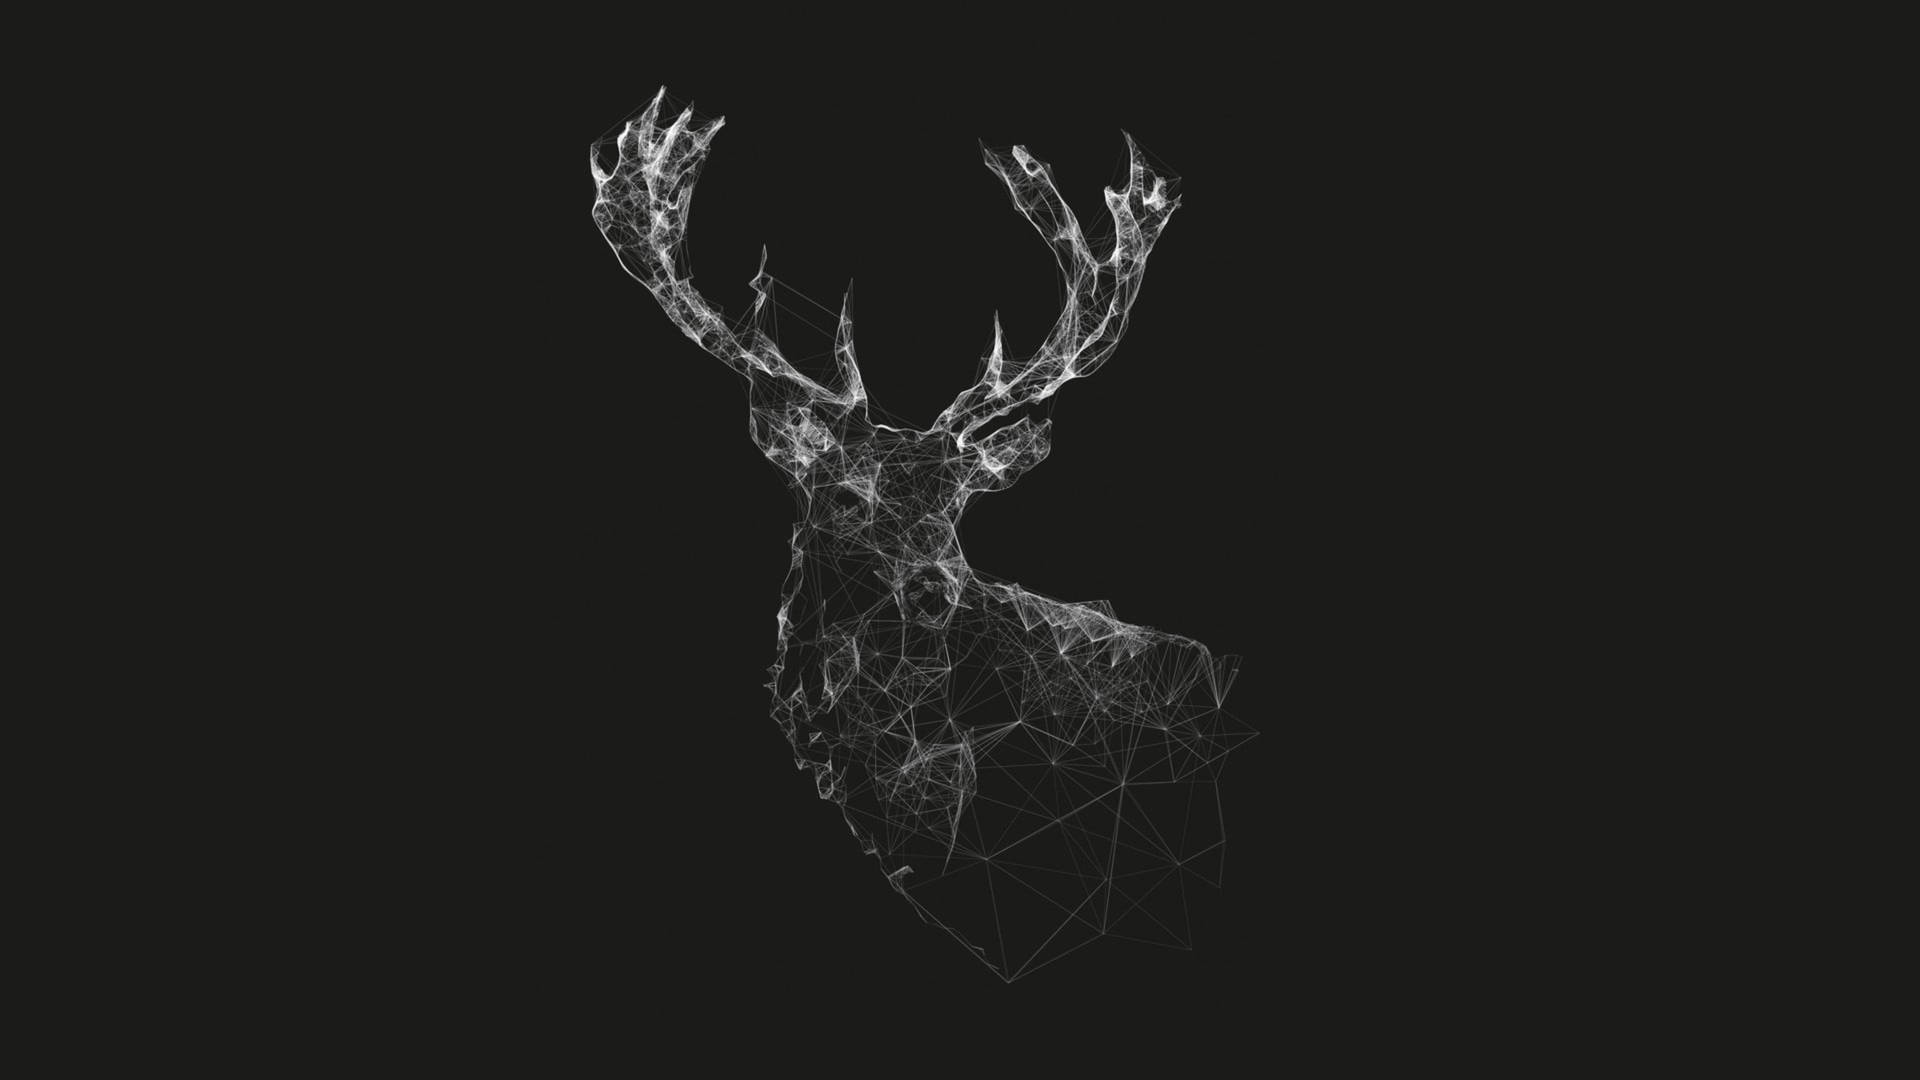 Luminous Deer Dark Abstract Art Wallpaper